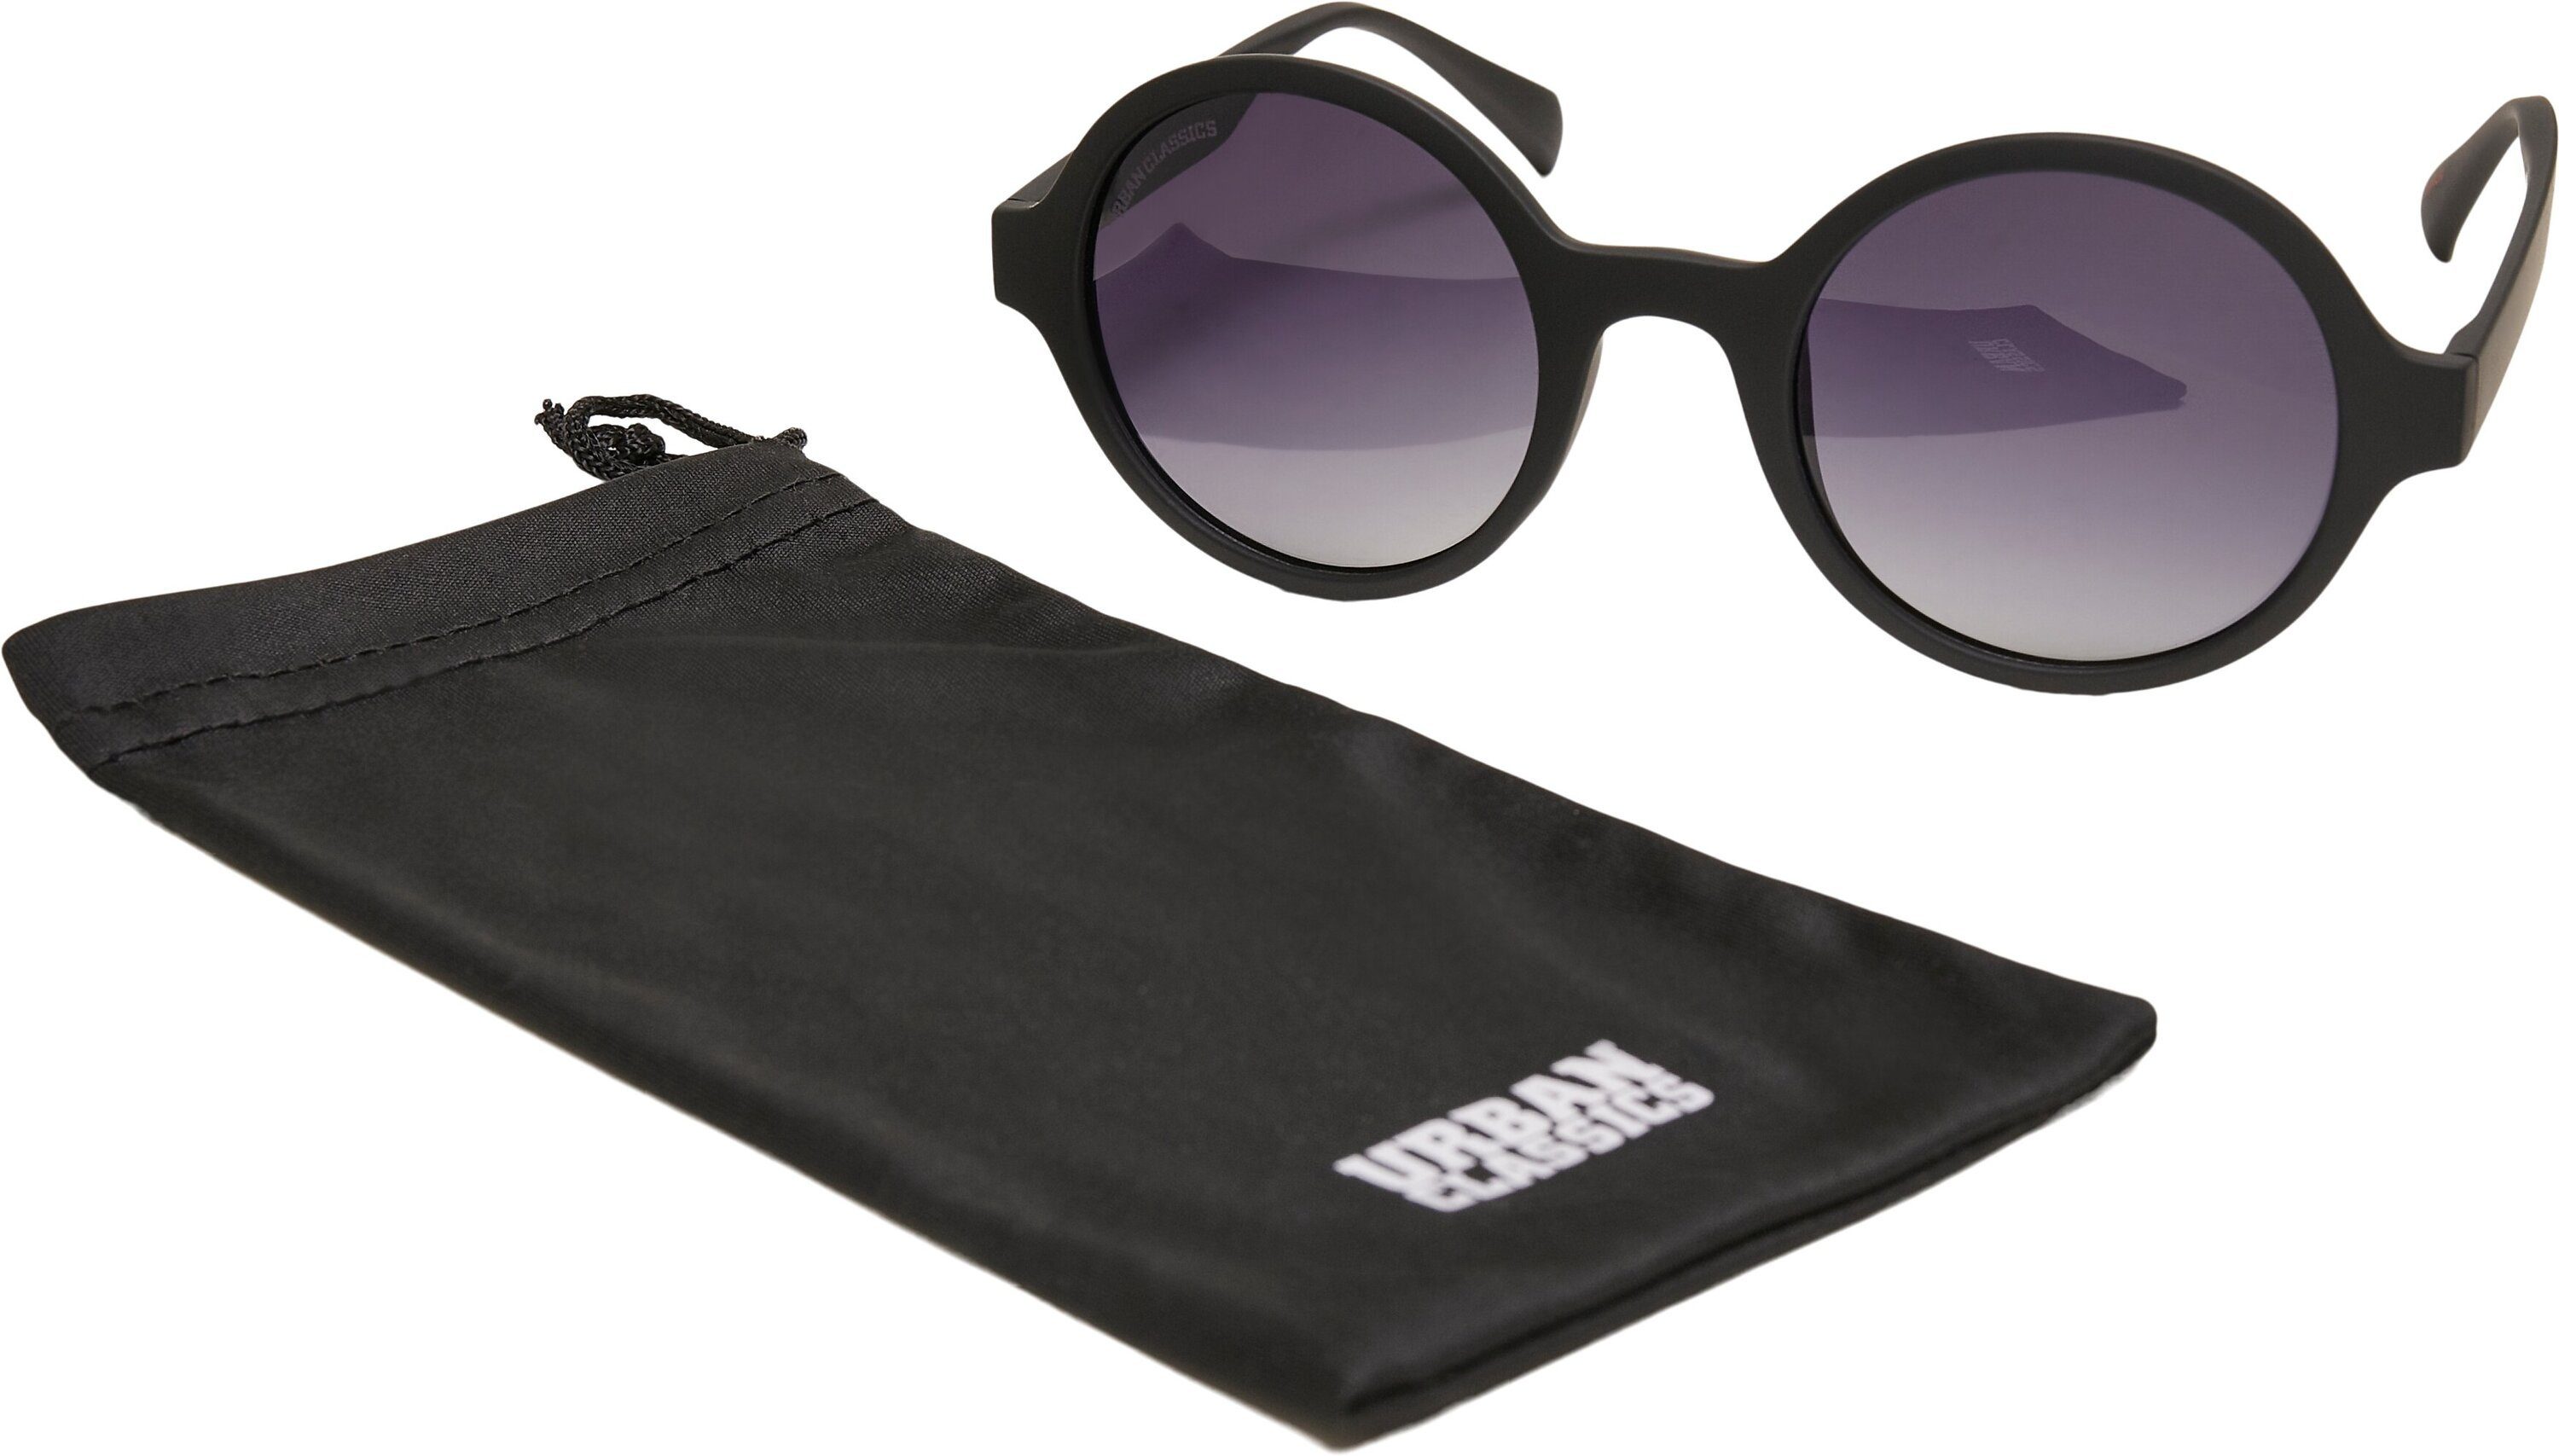 Sonnenbrille black/grey Sunglasses CLASSICS URBAN UC Accessoires Retro Funk